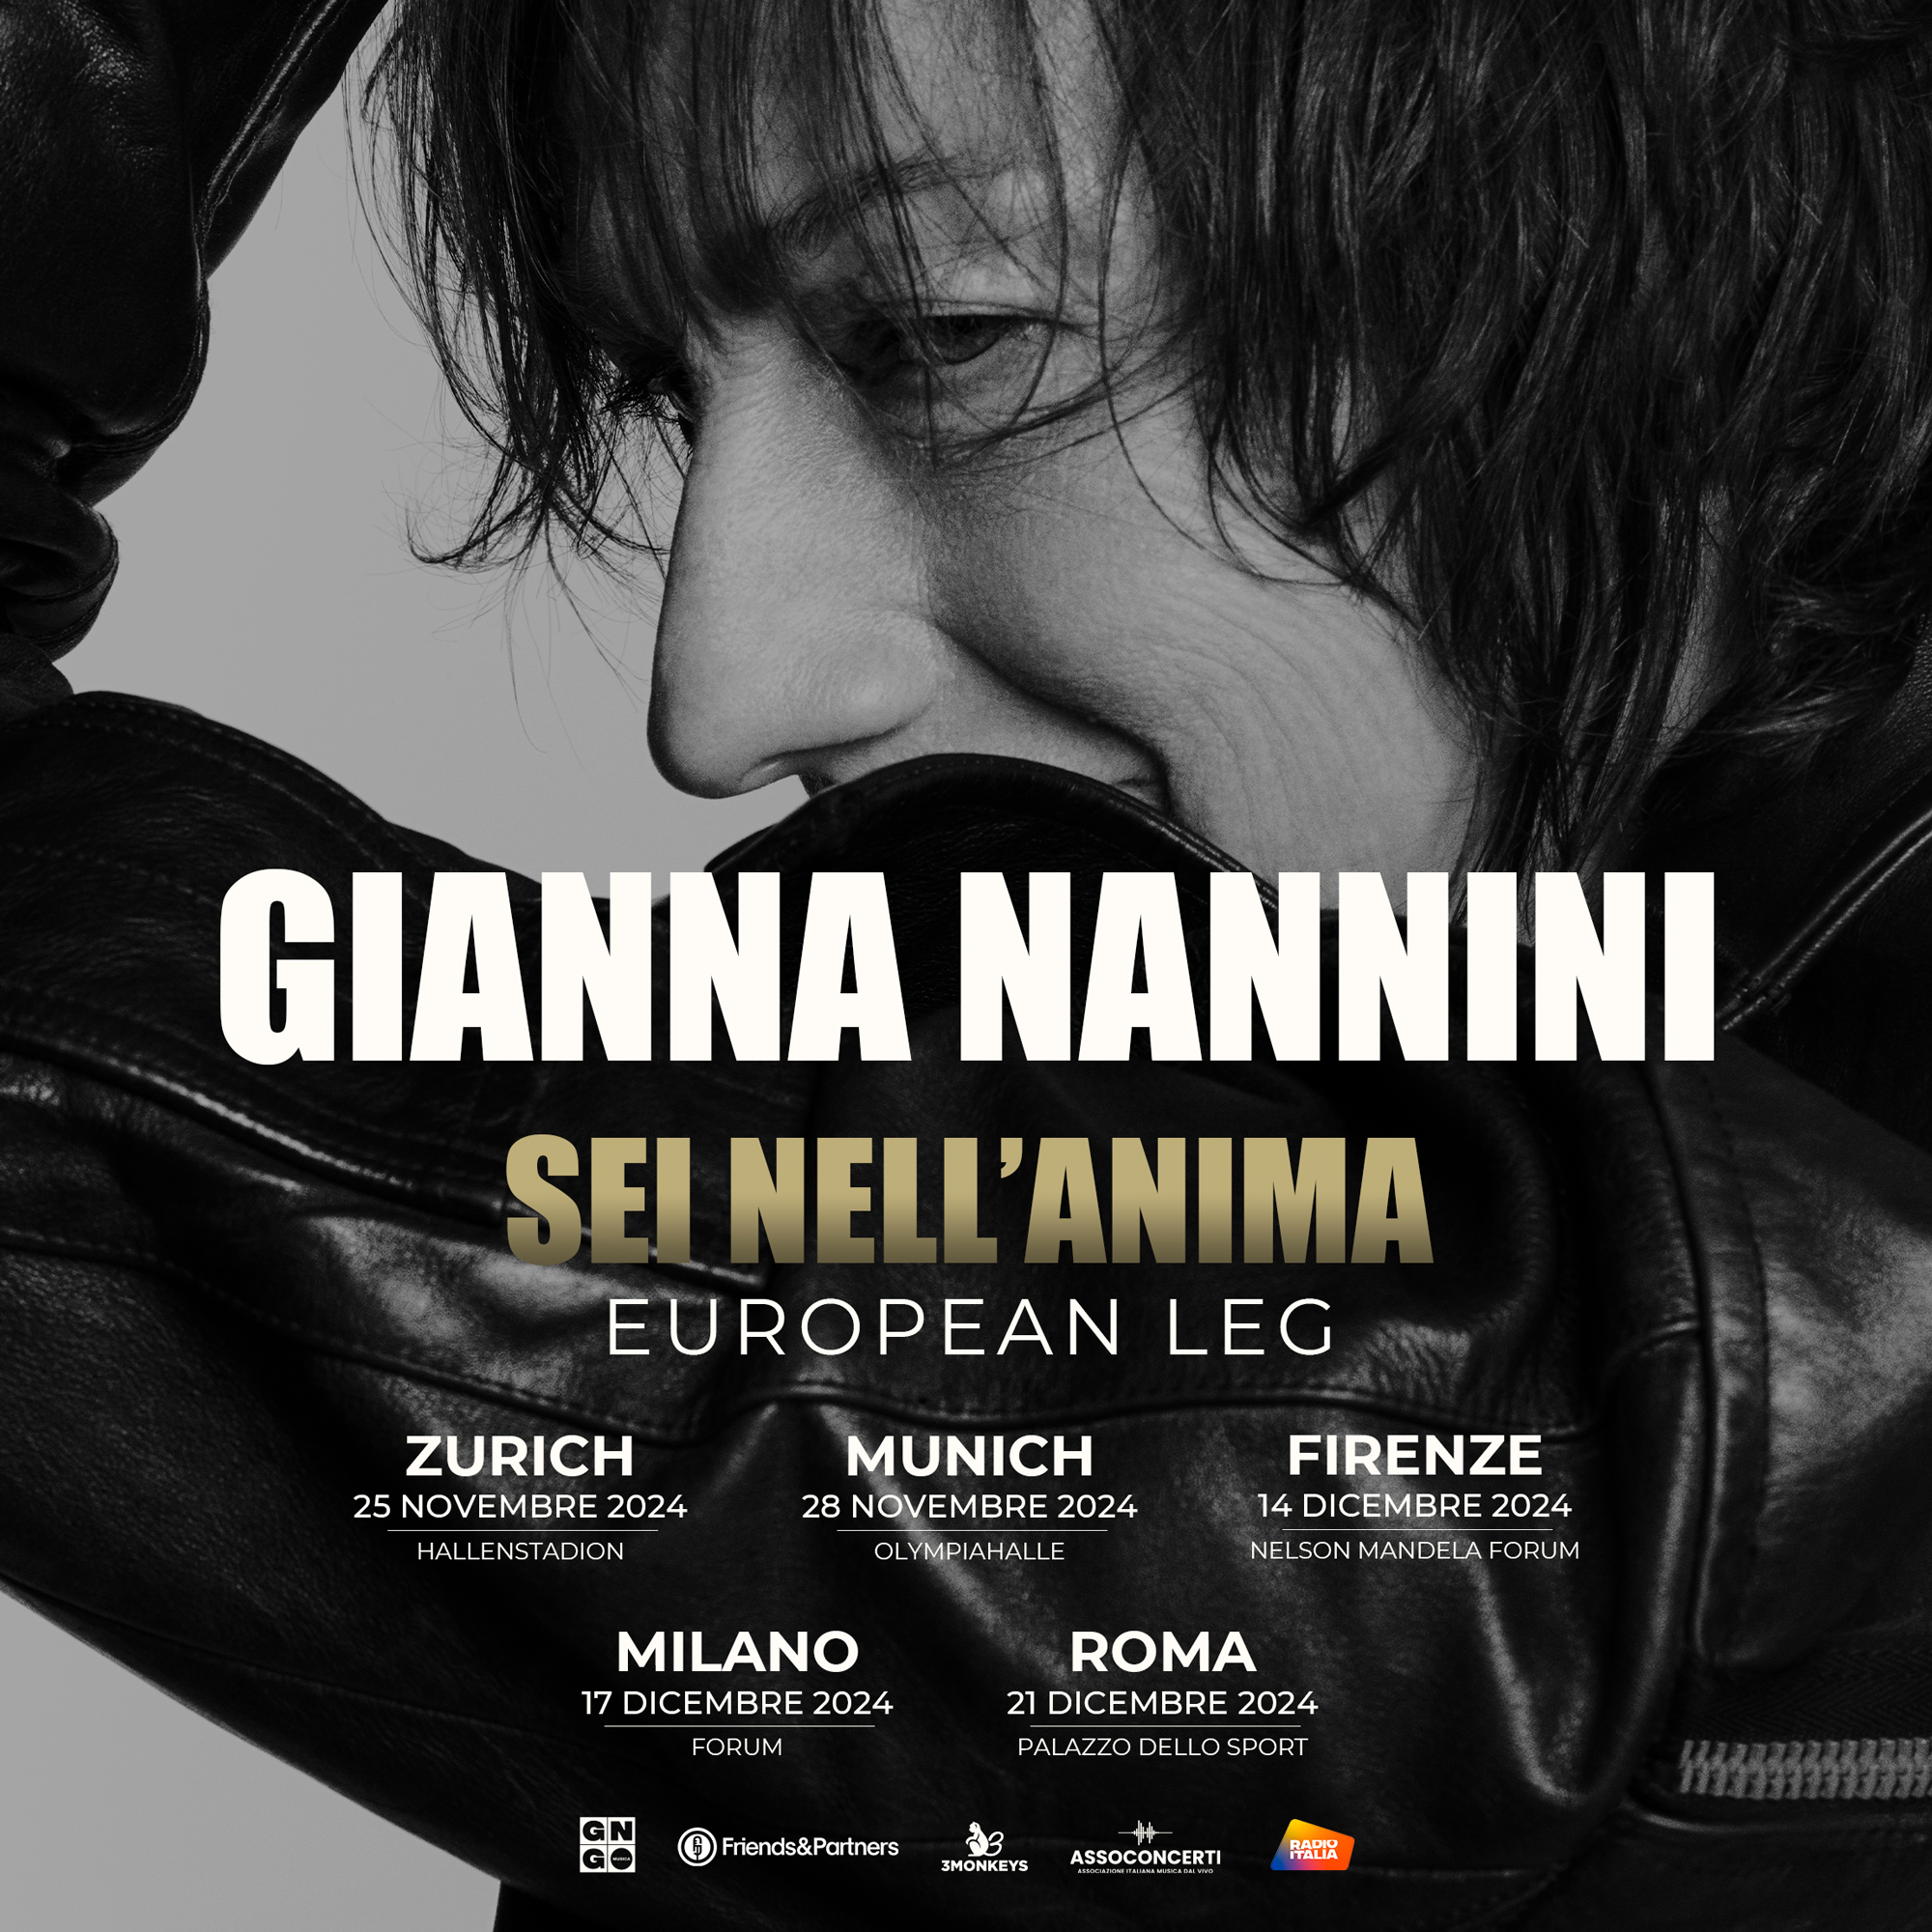 Gianna Nannini - Sei Nell'anima al Swiss Life Hall Tickets